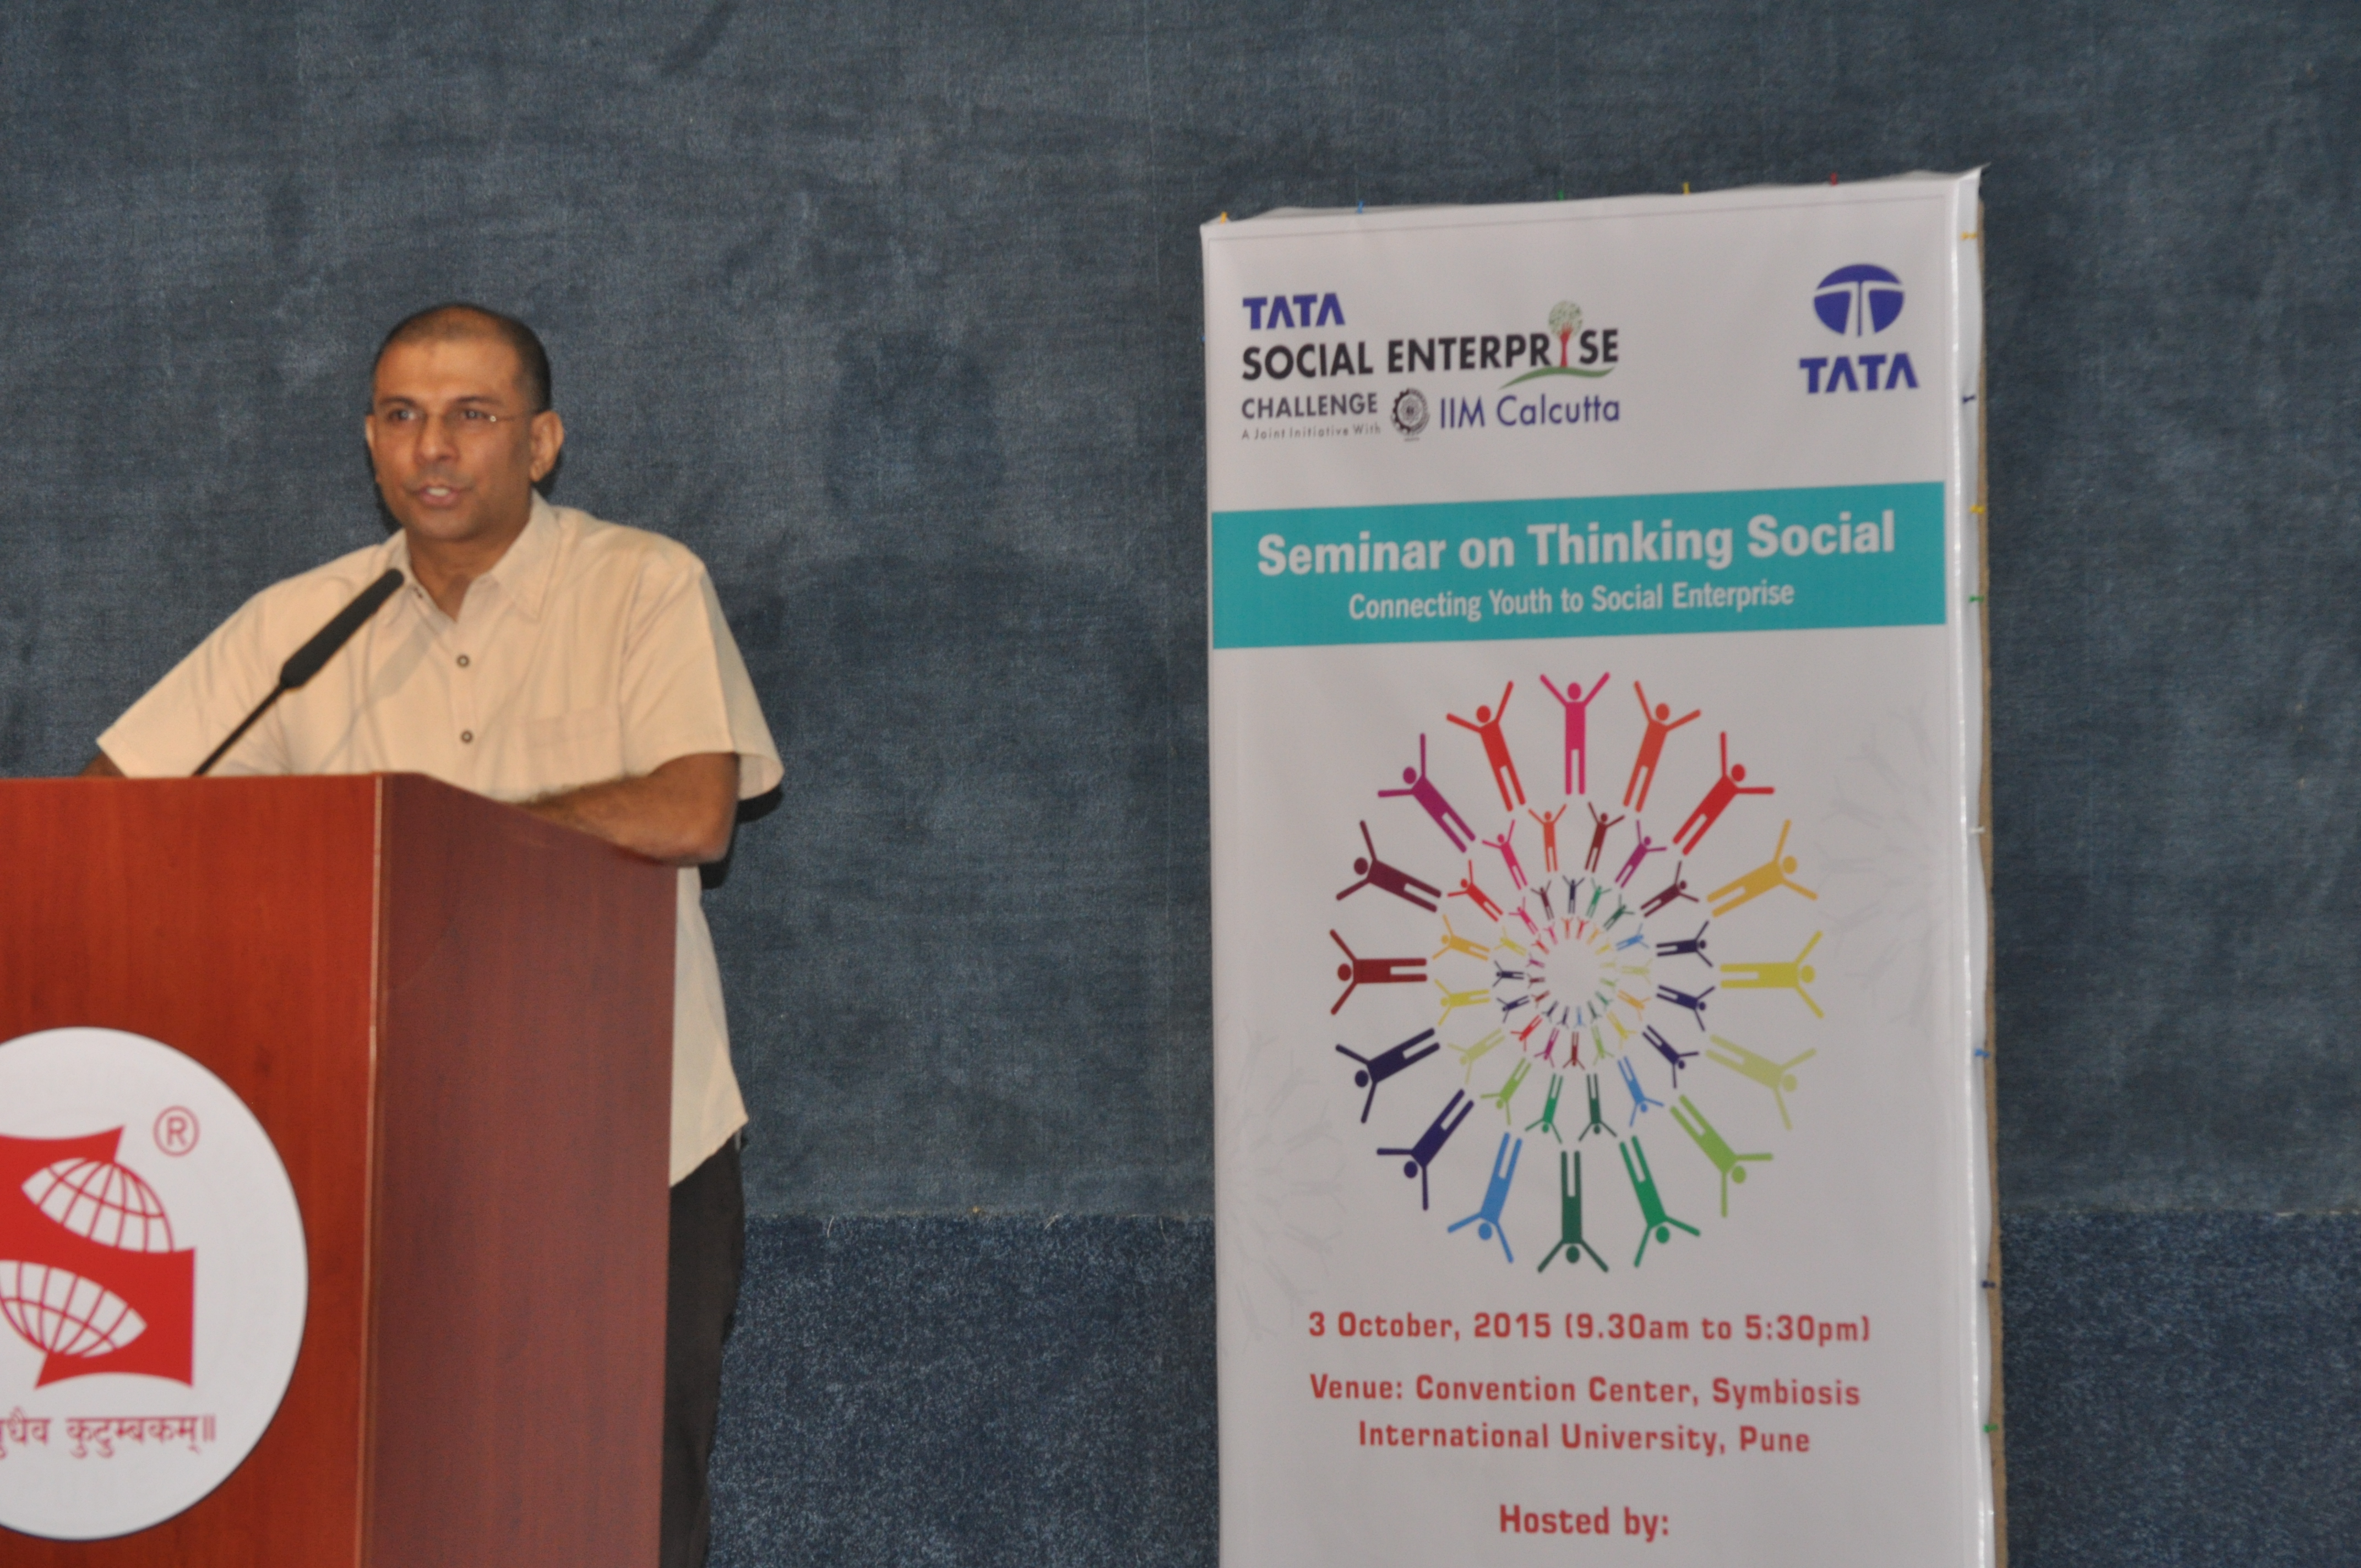 Seminar on Thinking Social